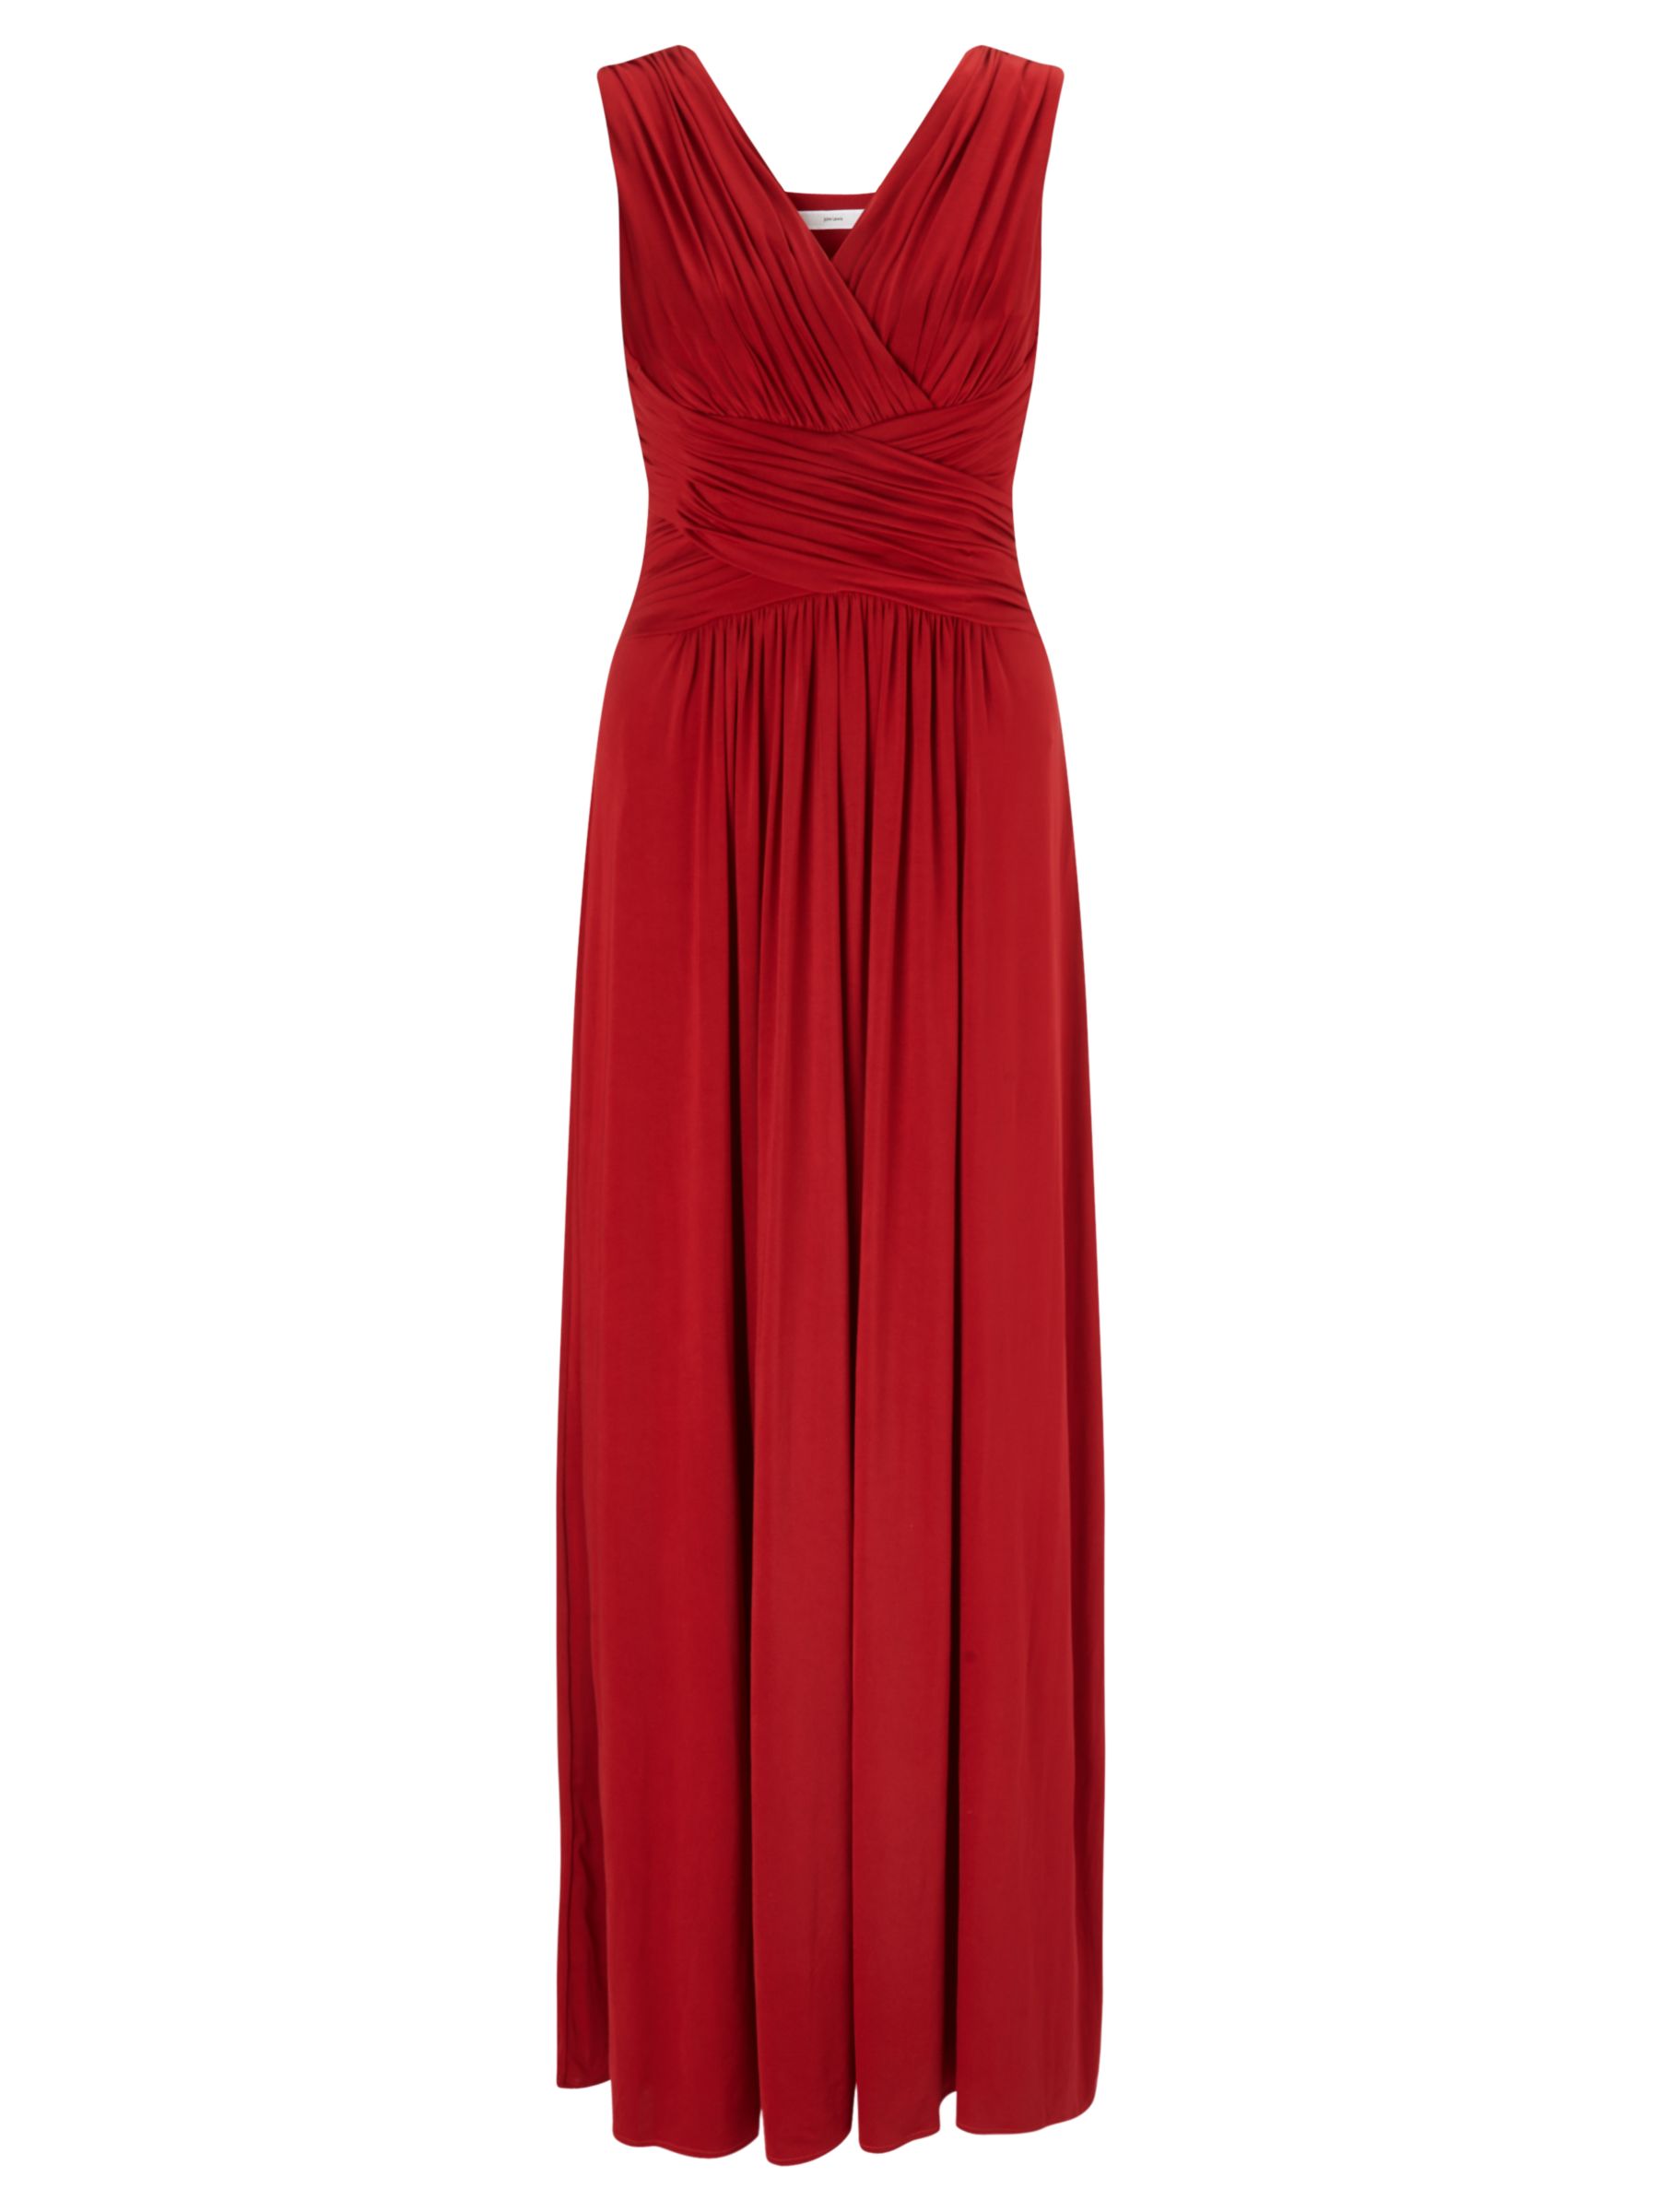 John Lewis Frances Jersey Maxi Dress, Red at John Lewis & Partners